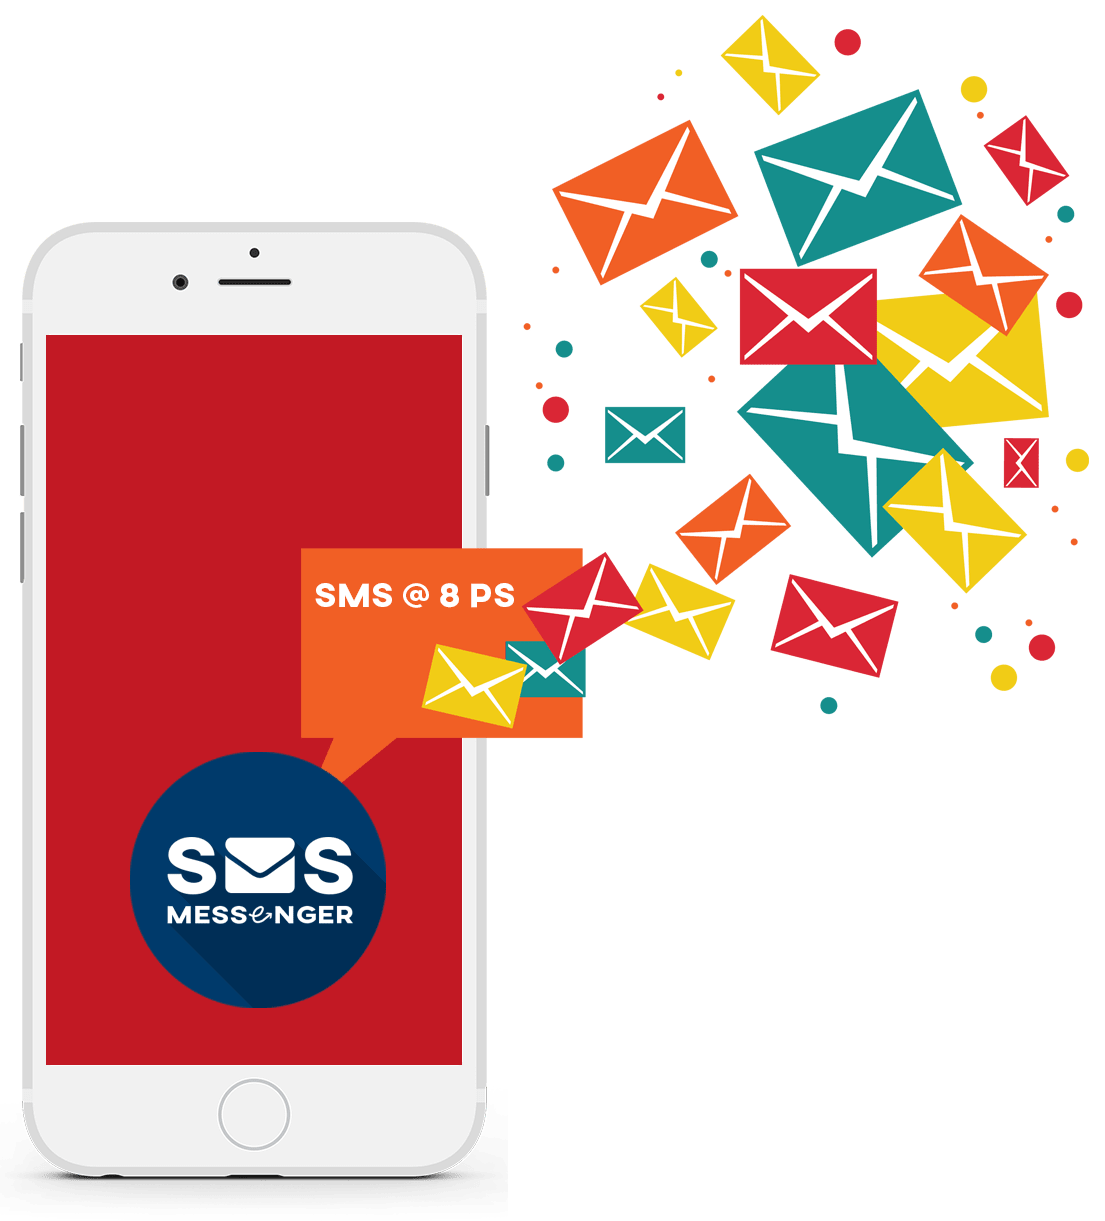 Transactional SMS Service